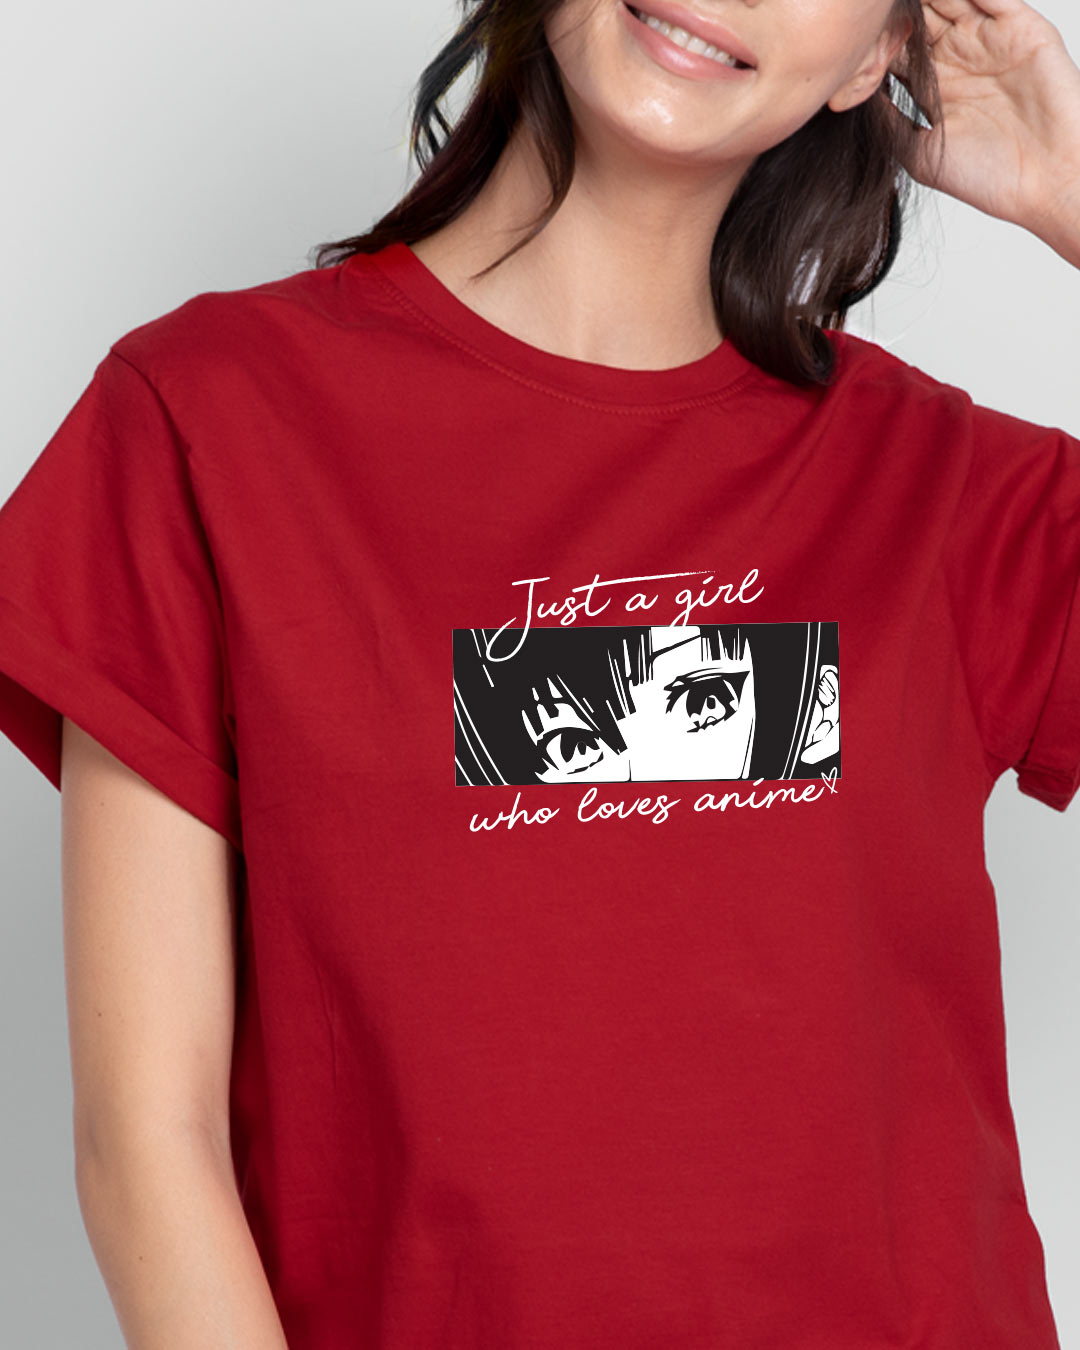 Naruto Vs Sasuke Red T Shirt Uchiha Sharingan Tee Cool Anime Gift Top Boys  Kids  Tshirts  AliExpress